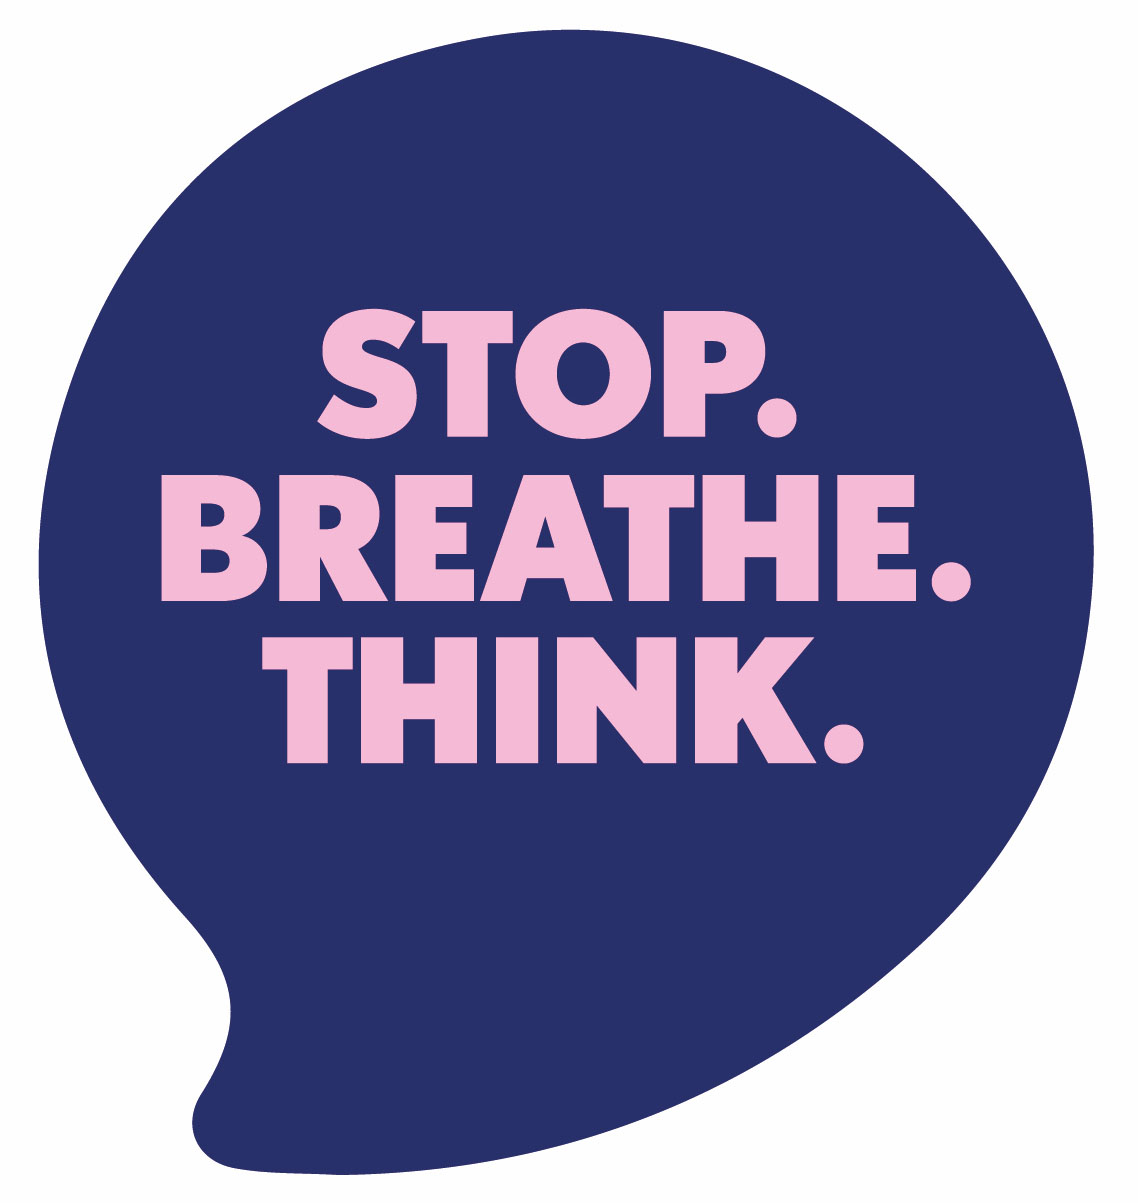 stop breathe think.jpg